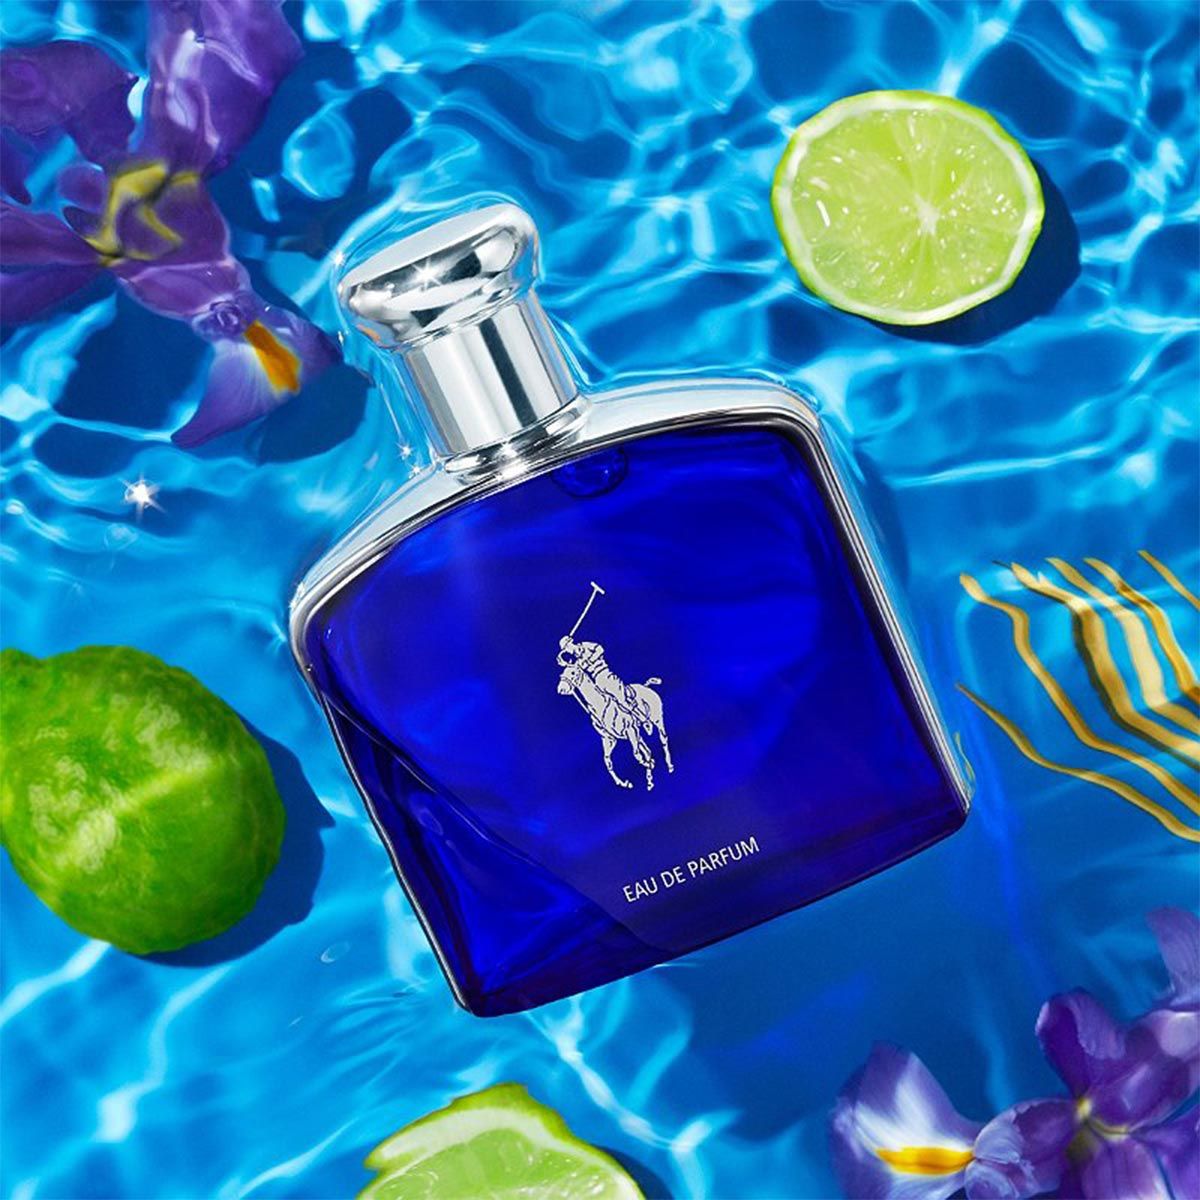 Nước hoa Polo Blue Eau de Parfum Ralph Lauren | namperfume